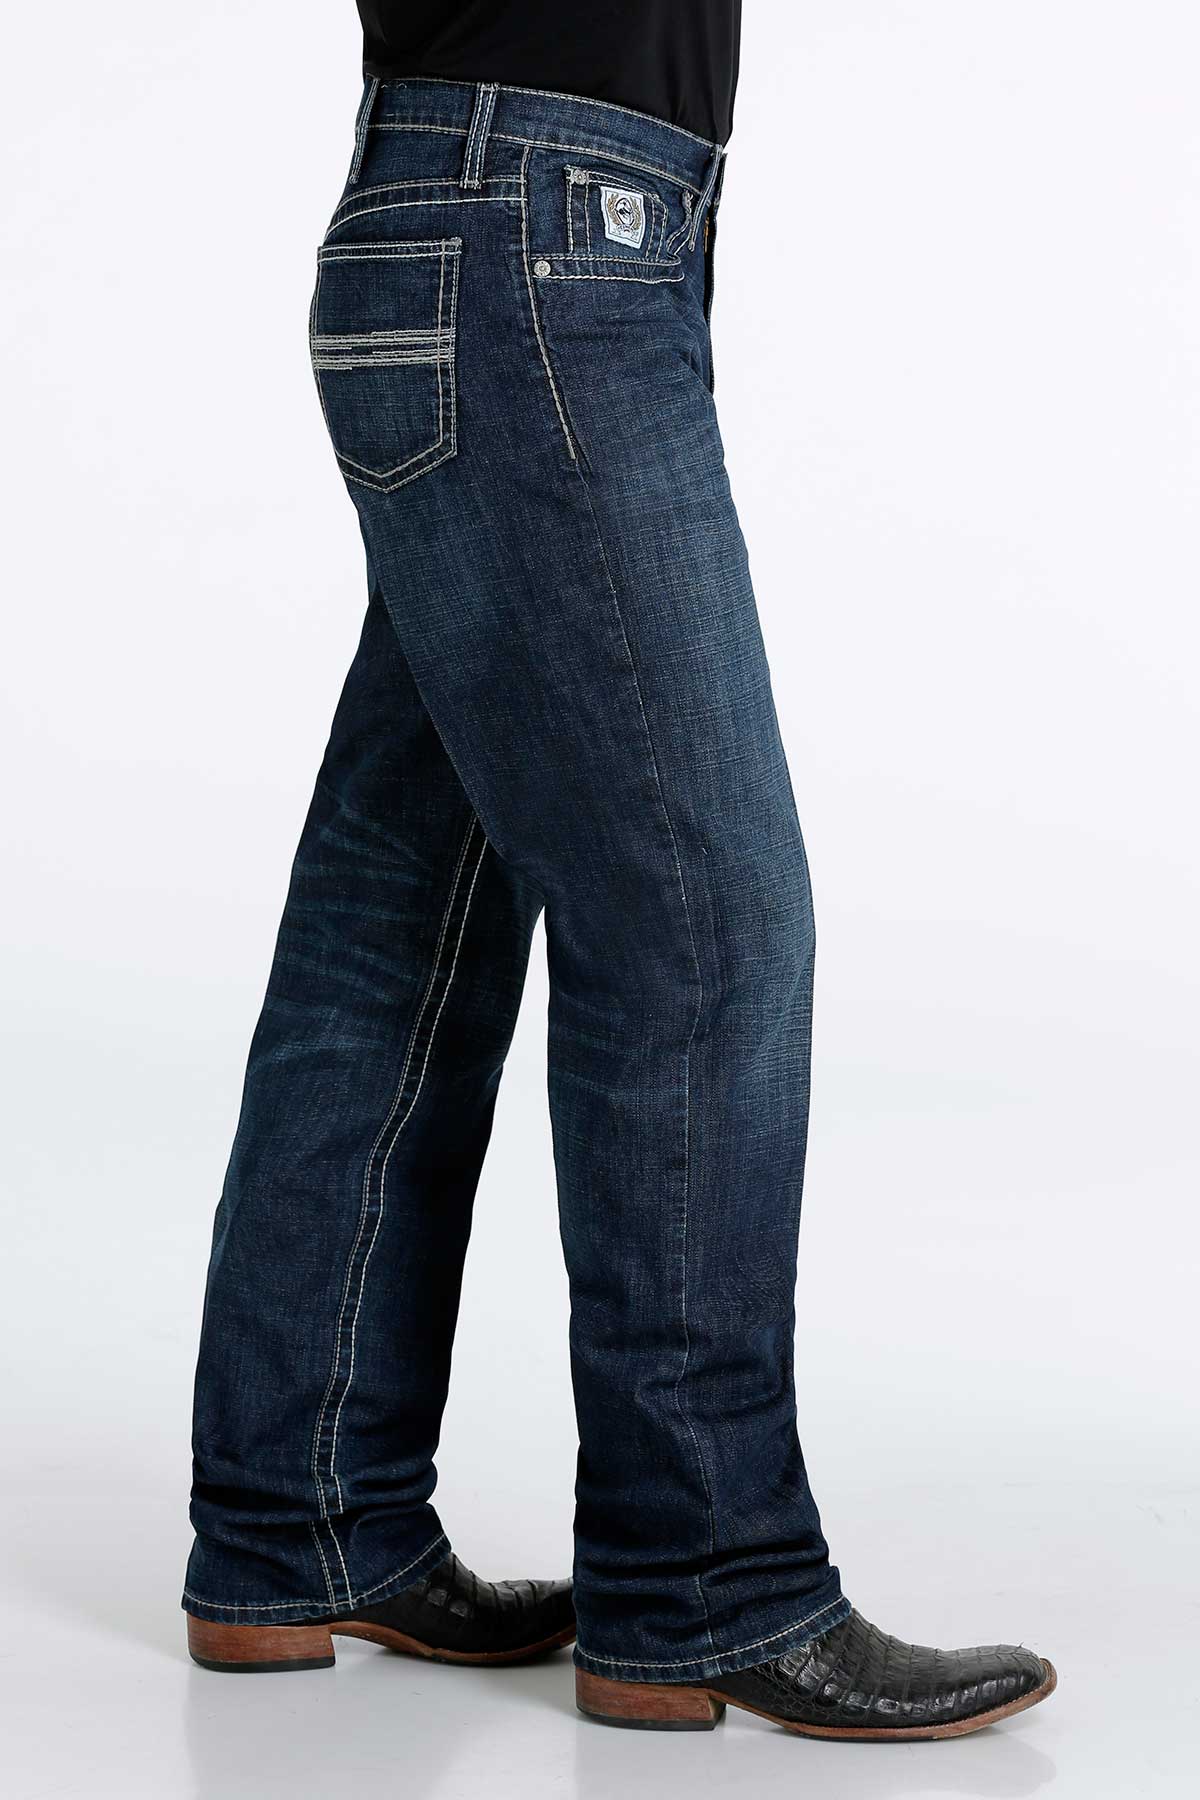 Cinch Jeans  Boy's Cinch Cap - Multi